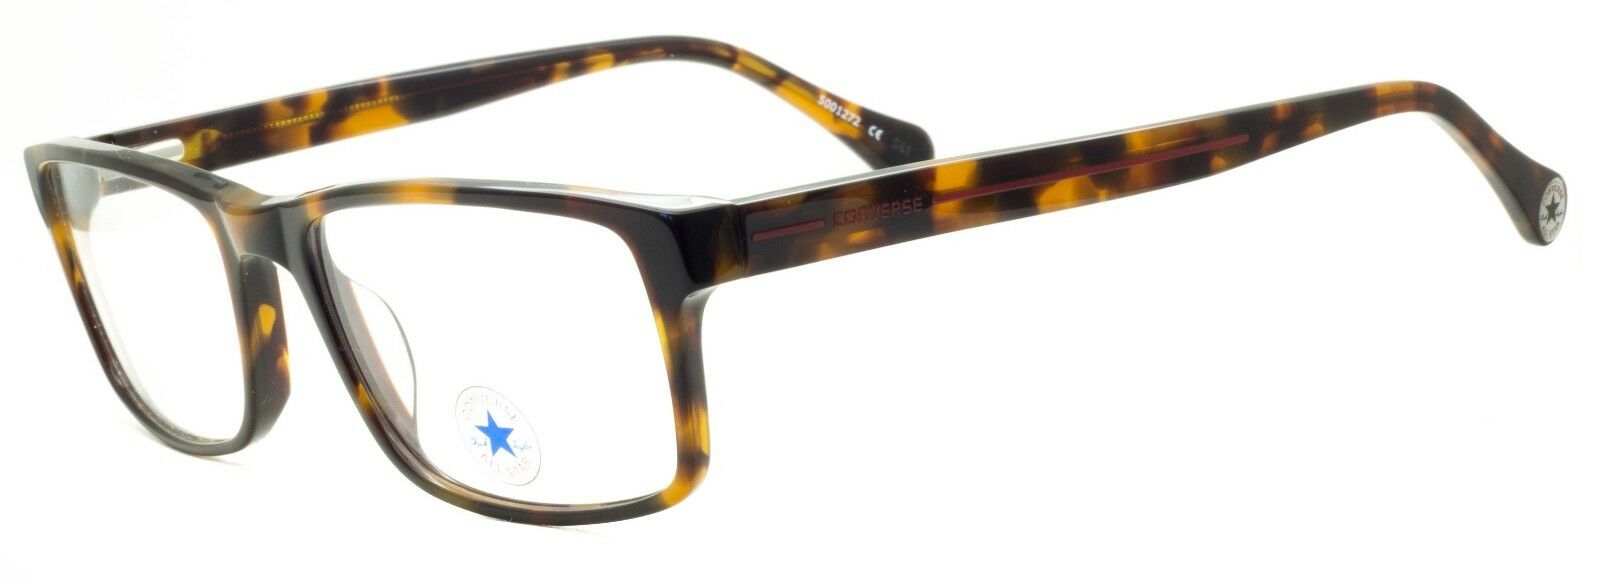 Converse All Star 44 30512344 FRAMES Glasses RX Optical Eyewear Eyeglasses - New